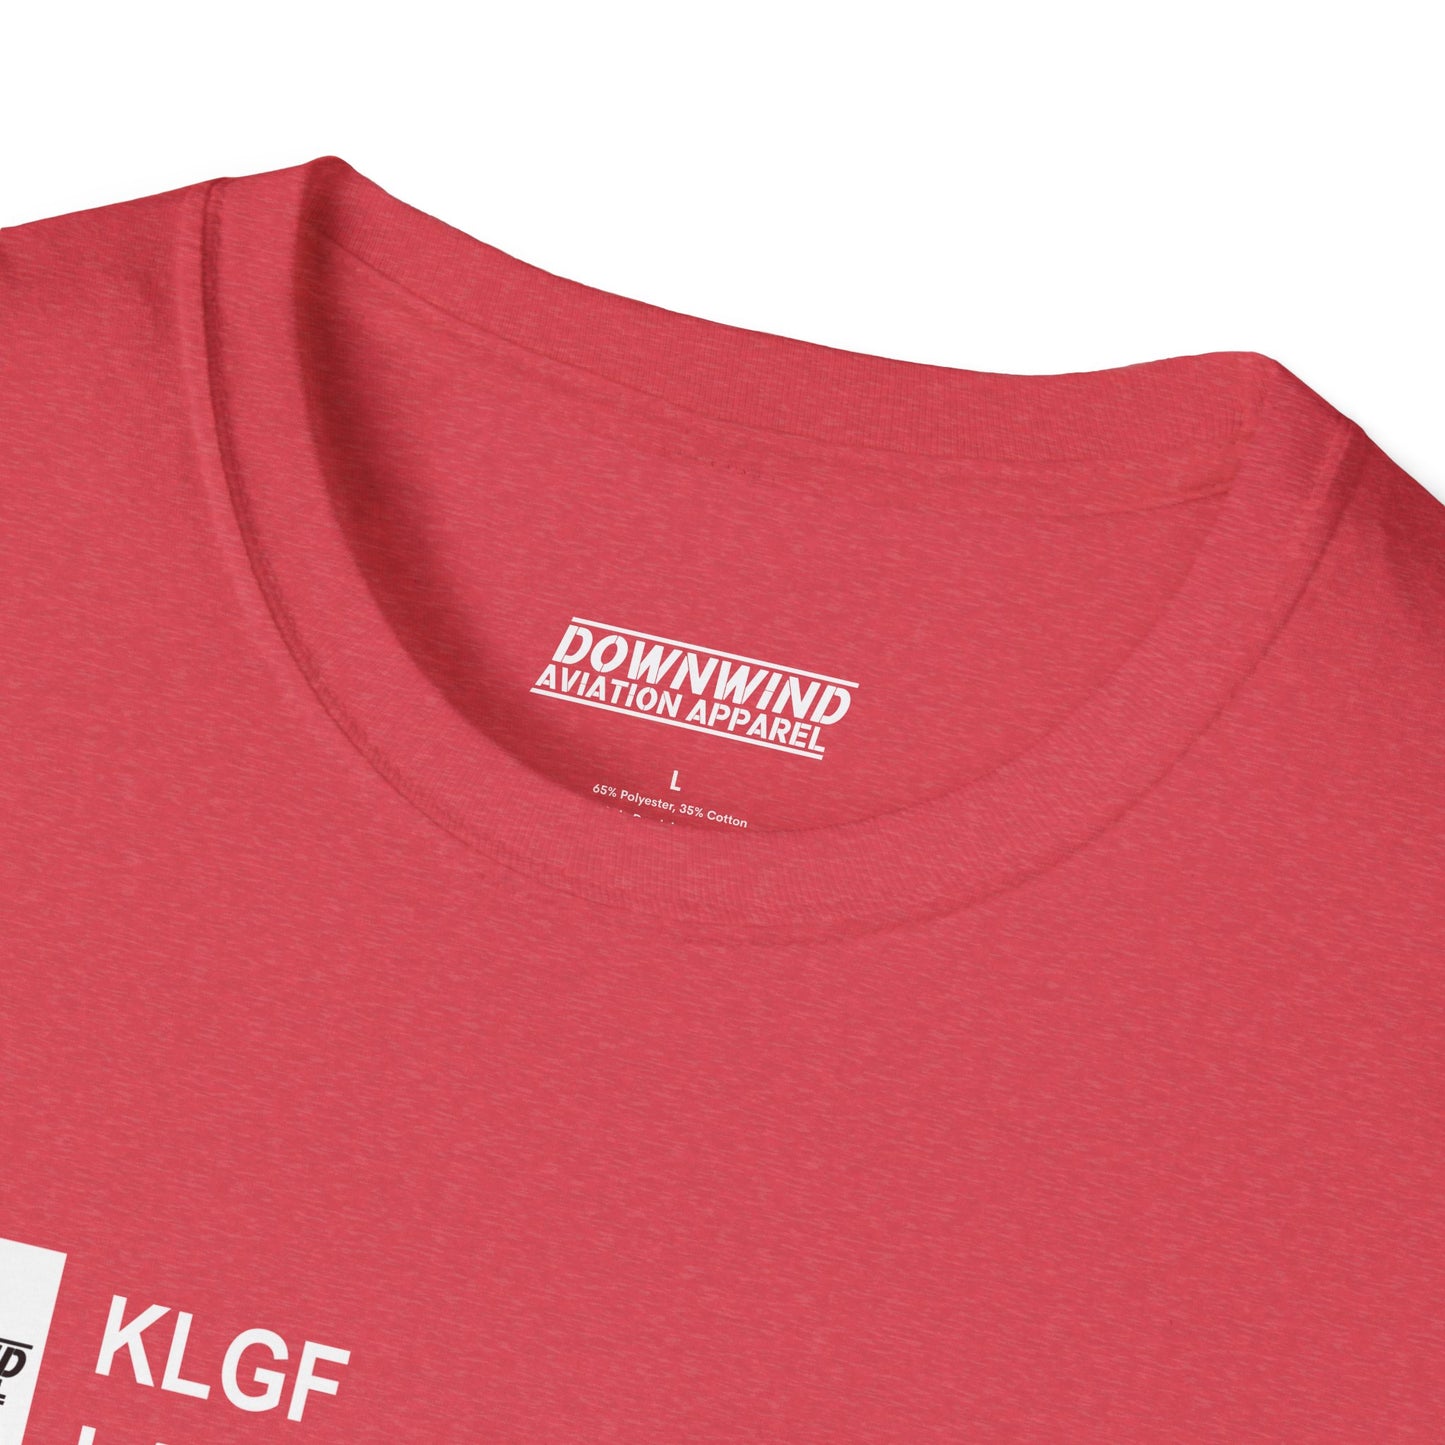 KLGF / Laguna Army Airfield T-Shirt